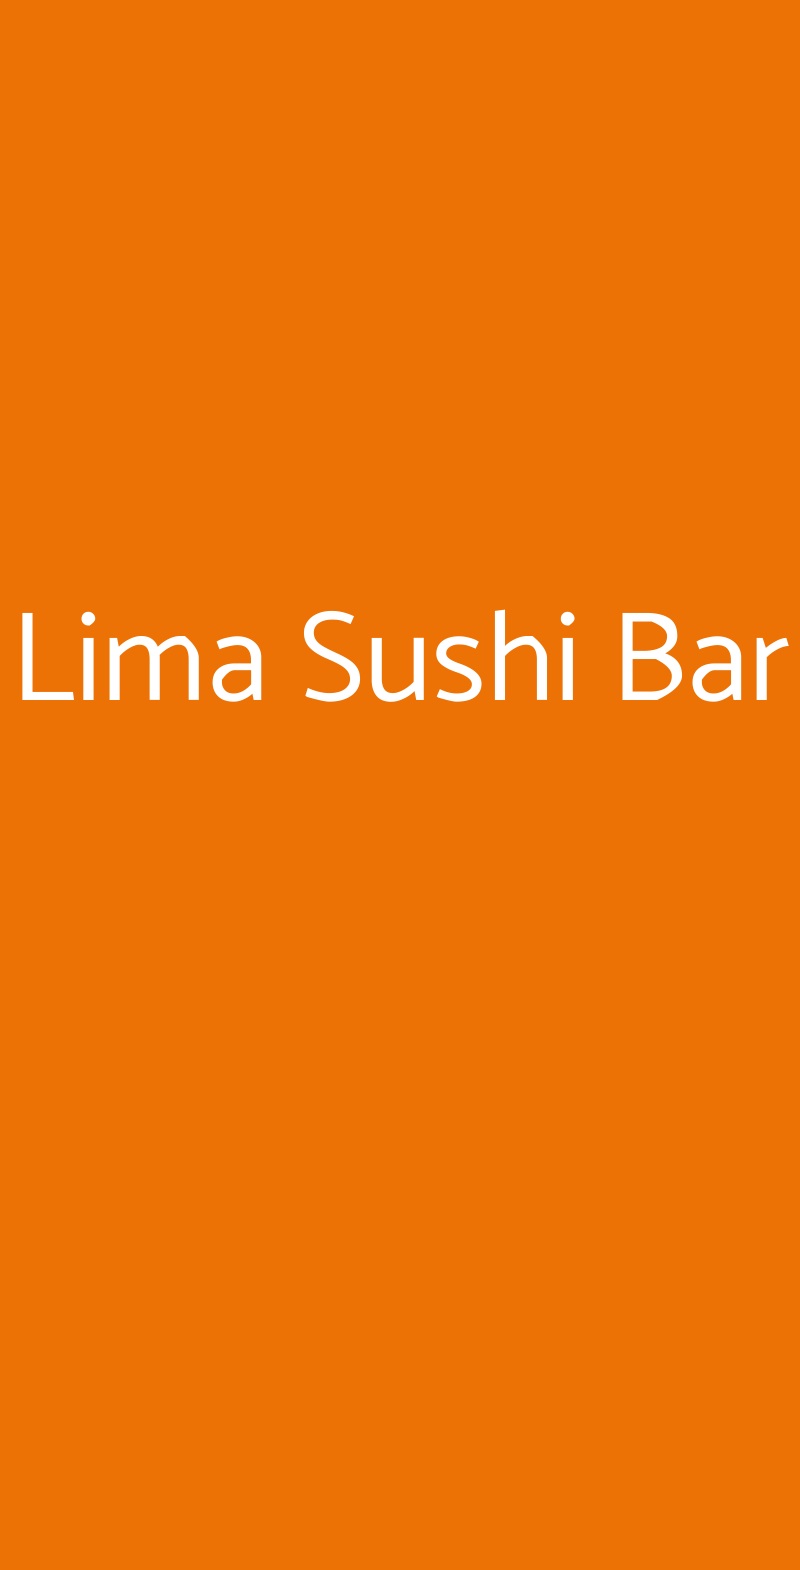 Lima Sushi Bar Milano menù 1 pagina